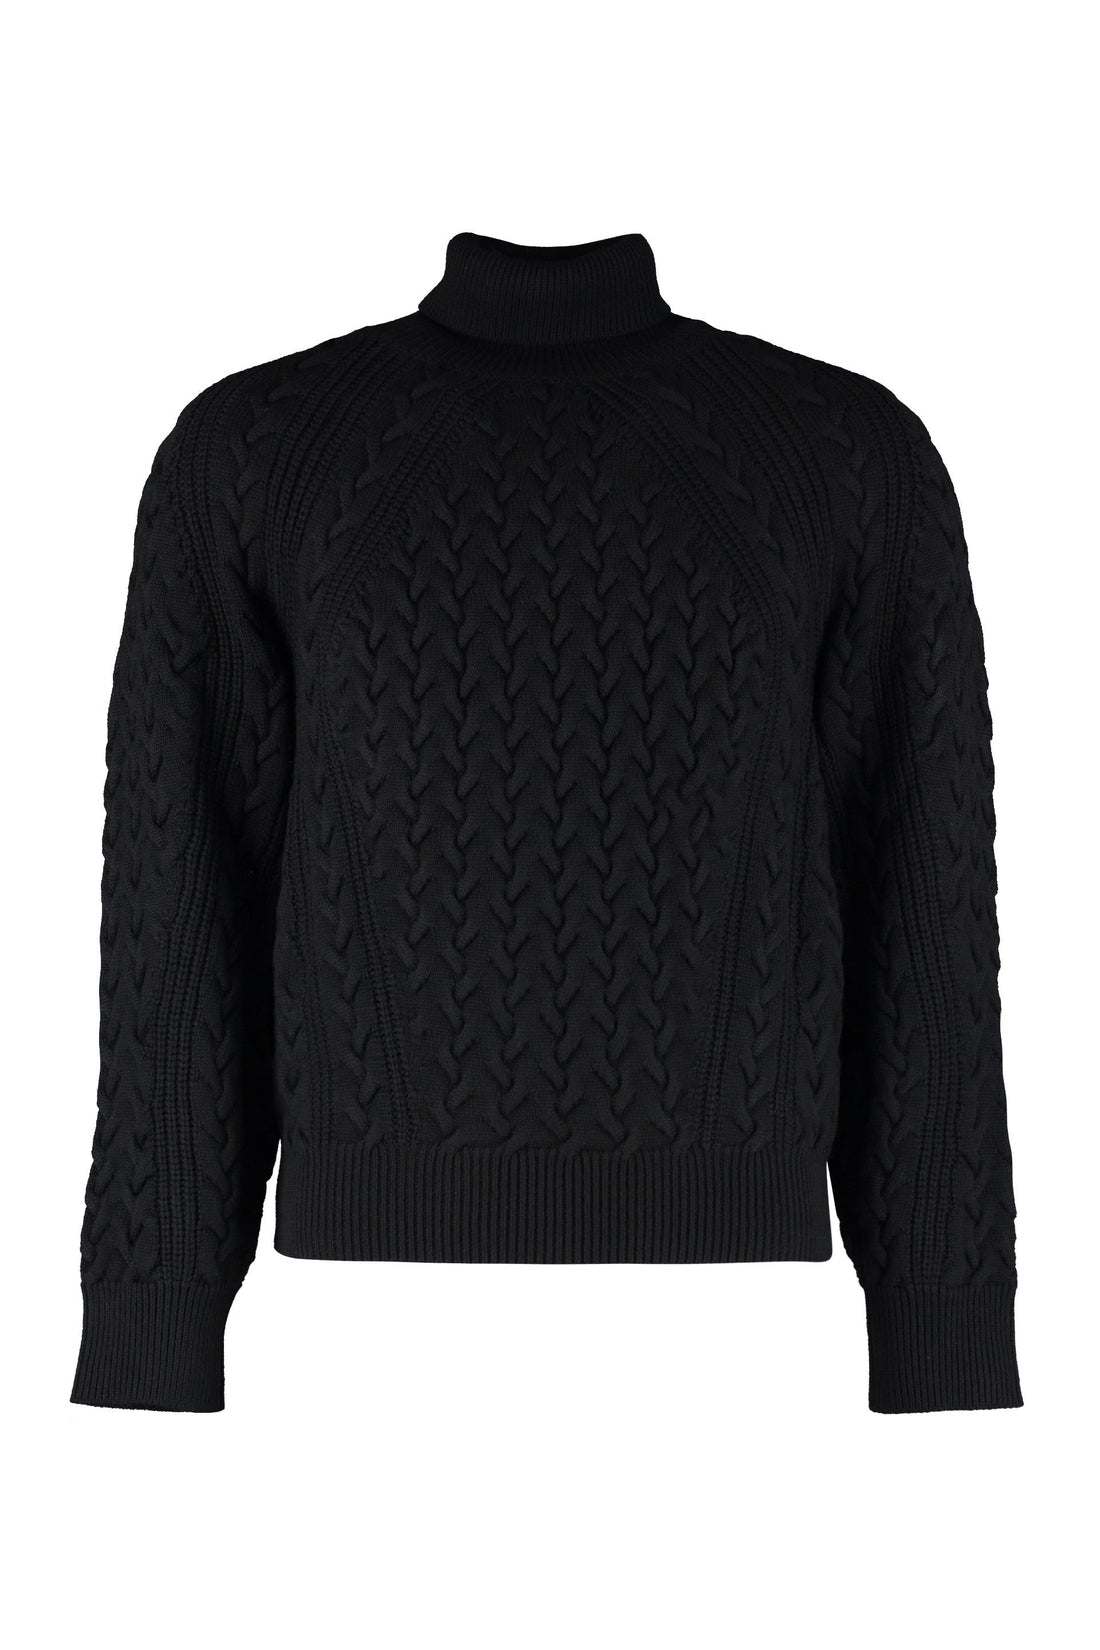 Zegna-OUTLET-SALE-Wool turtleneck sweater-ARCHIVIST